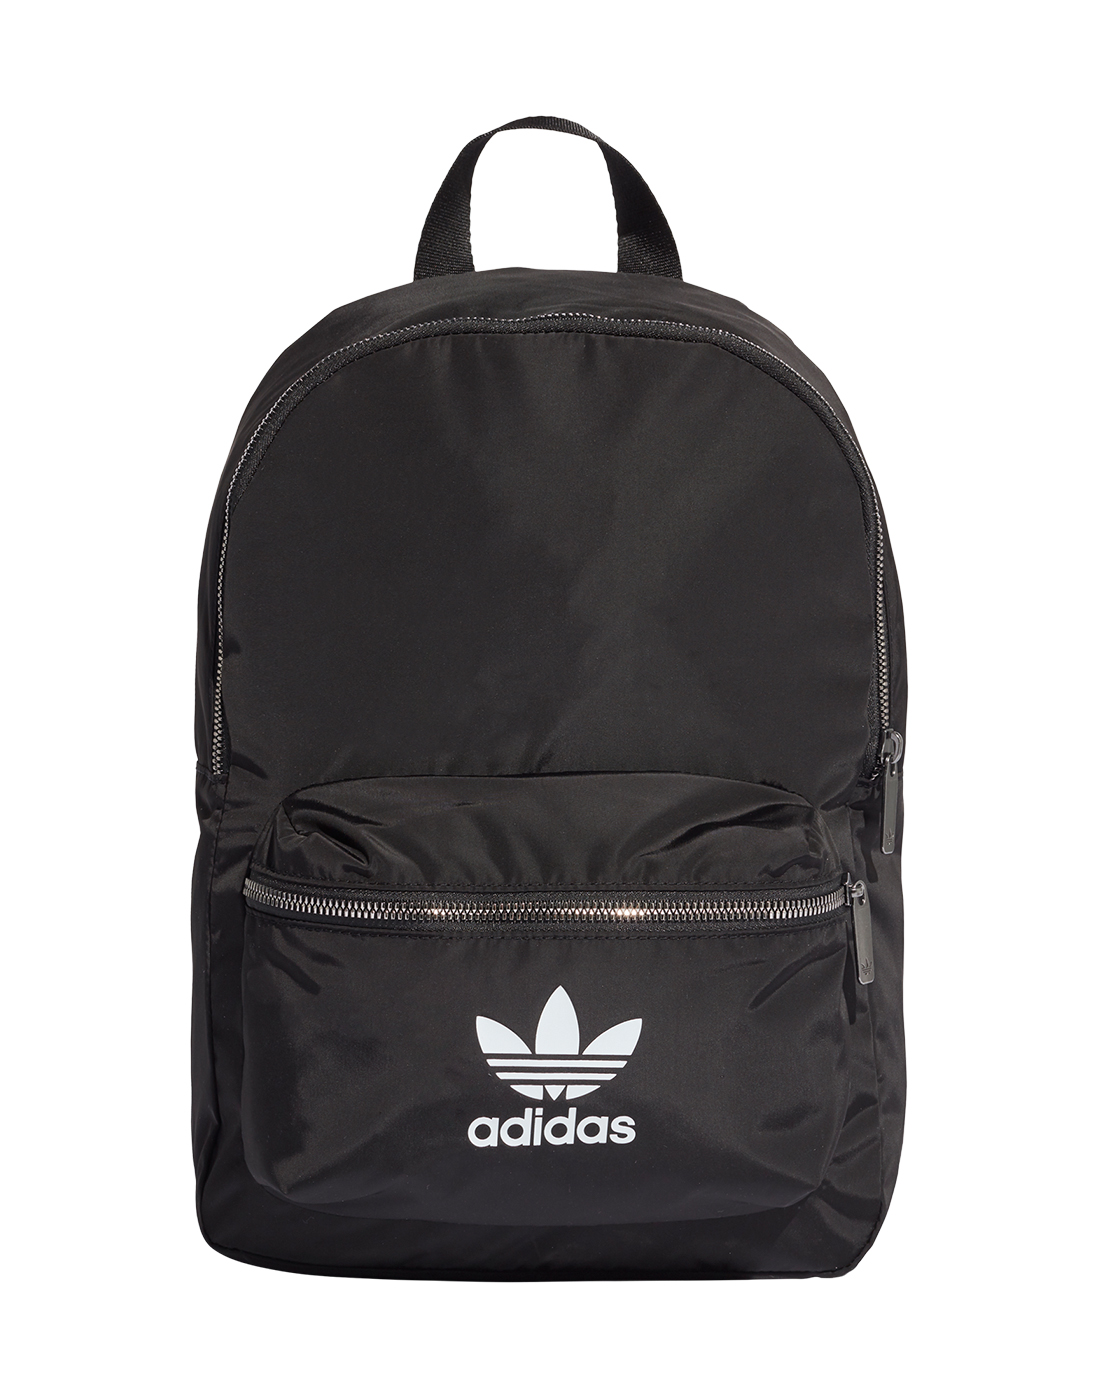 adidas trefoil black backpack